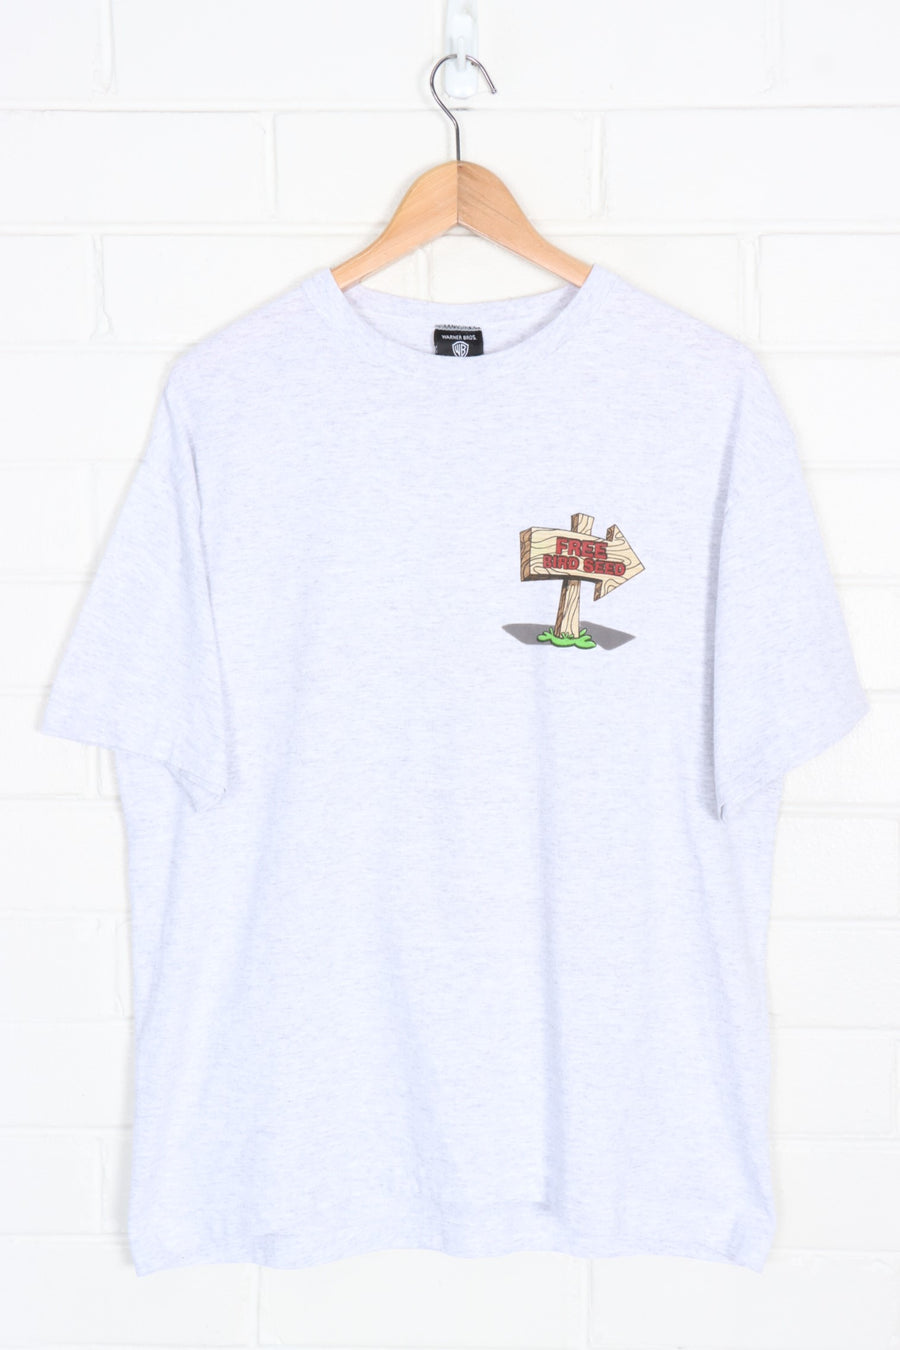 Vintage 1996 LOONEY TUNES Road Runner & Coyote T-Shirt (M-L)